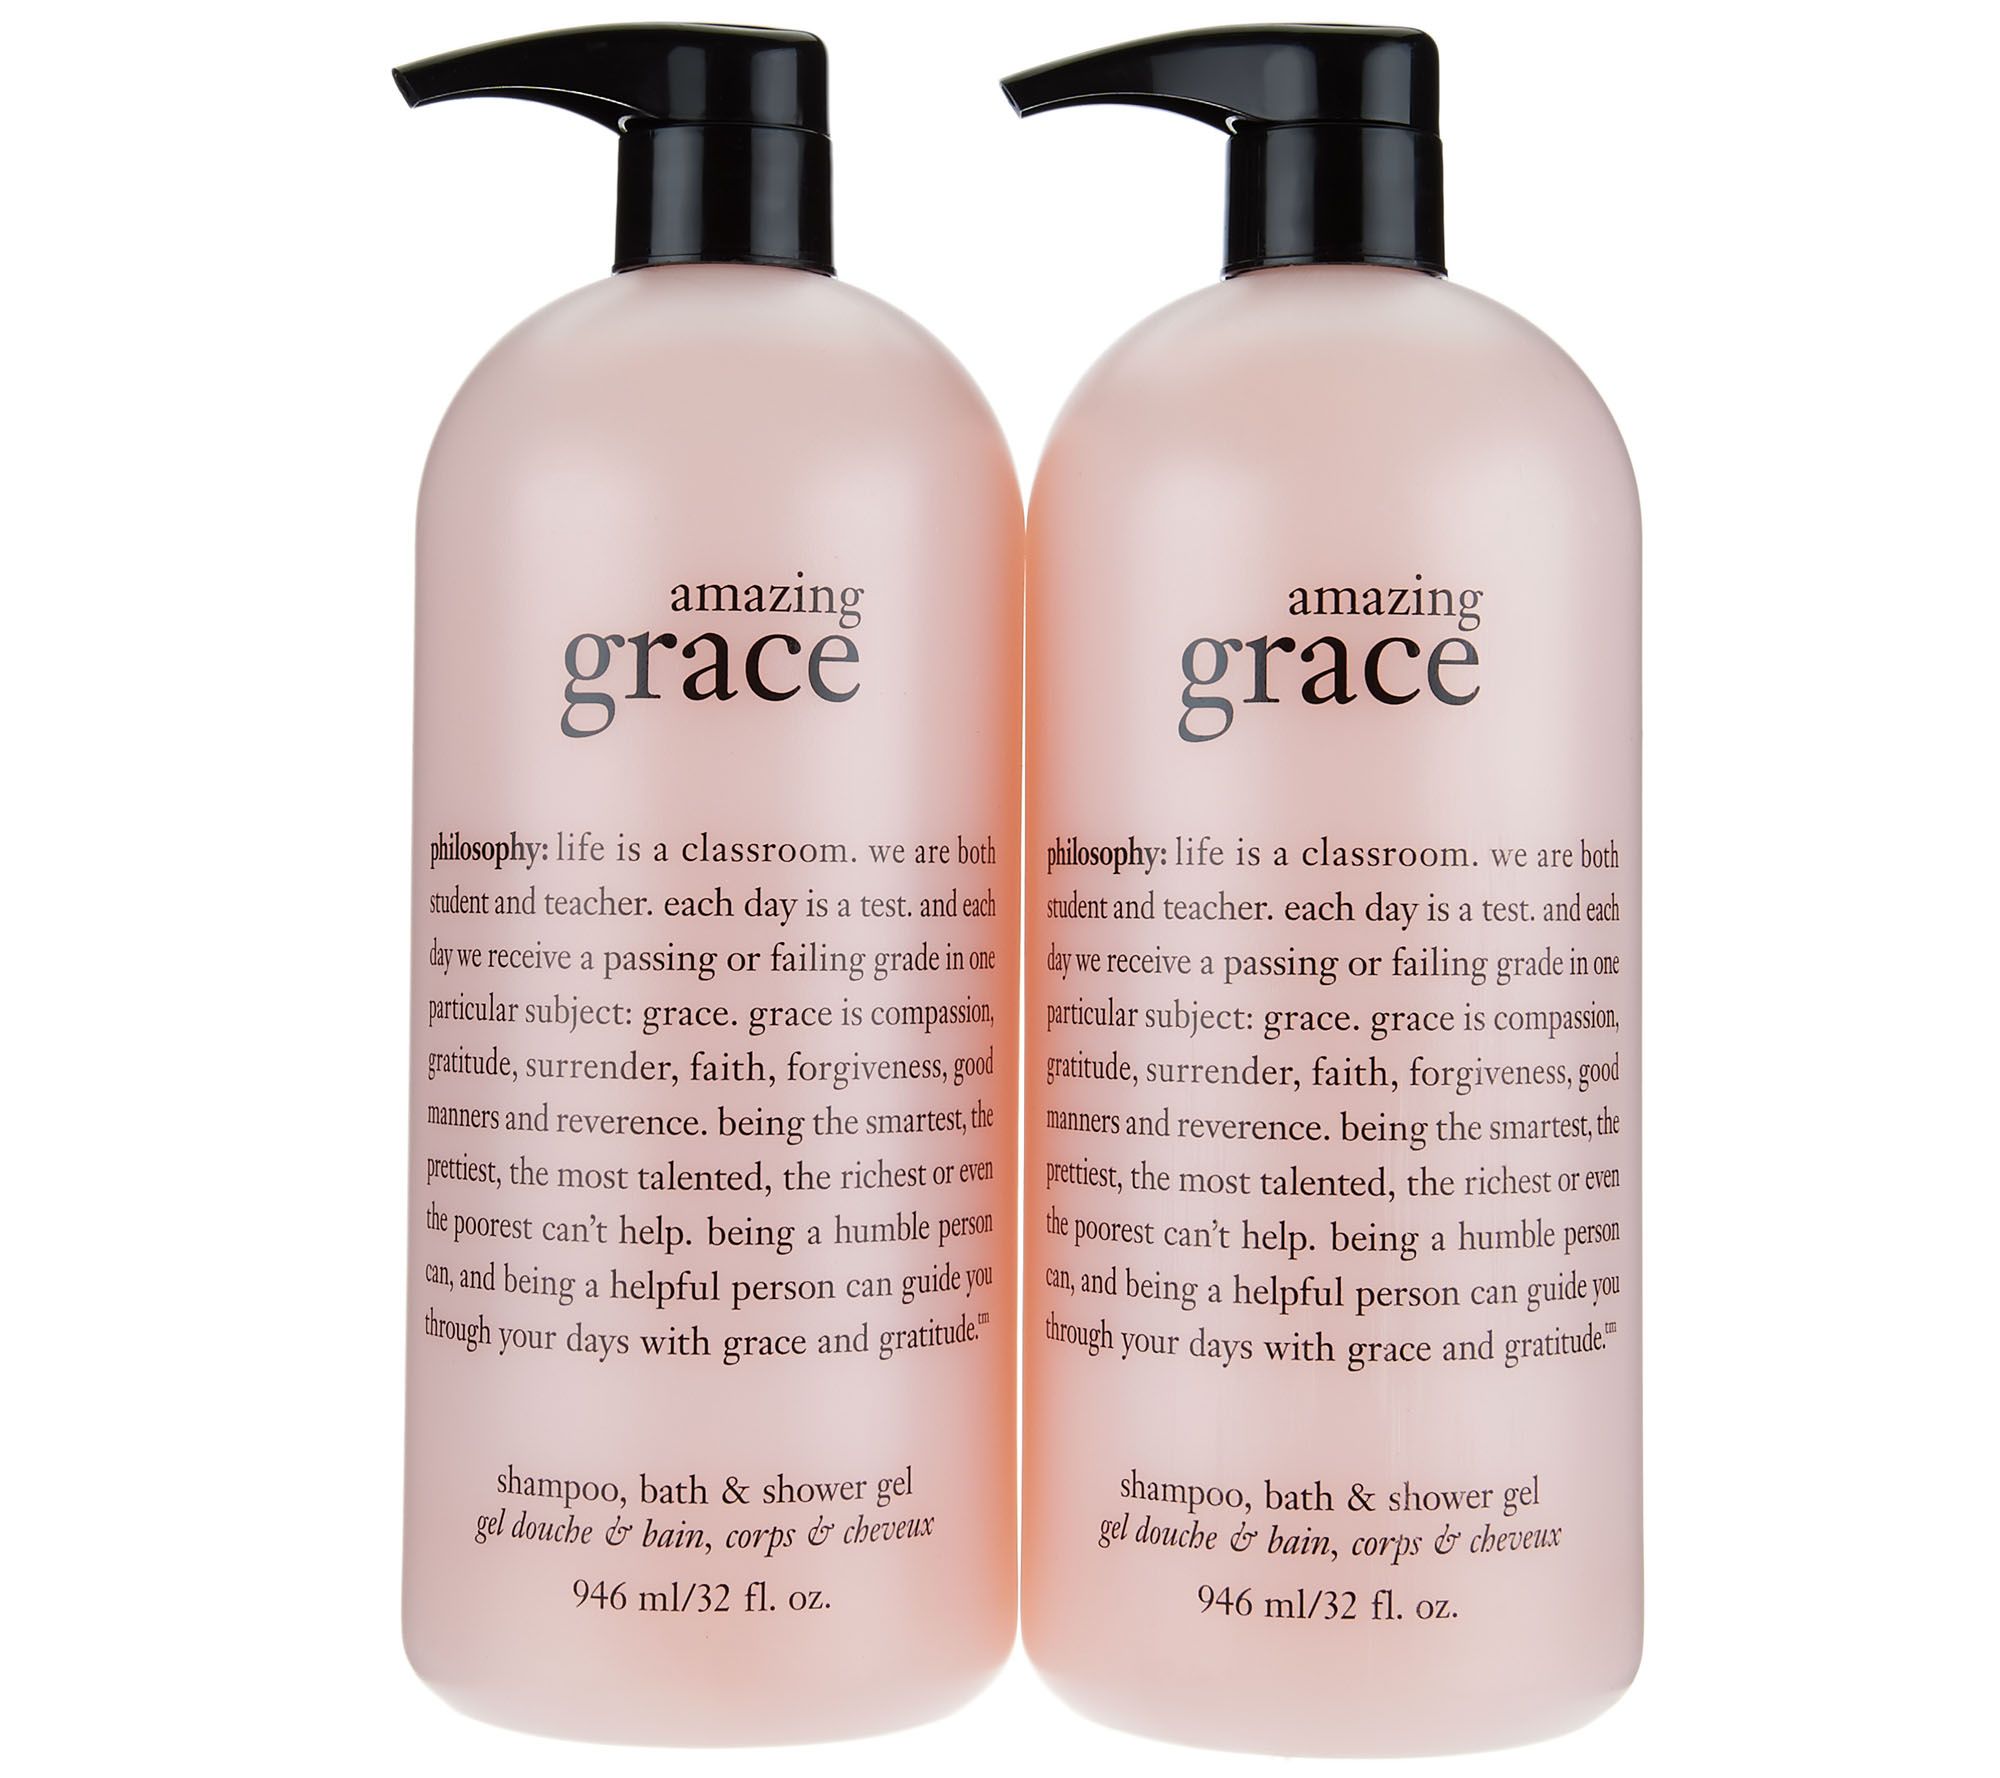 Profeet Streng Trouw philosophy super-size 32 oz fragrance shower gel duo - QVC.com